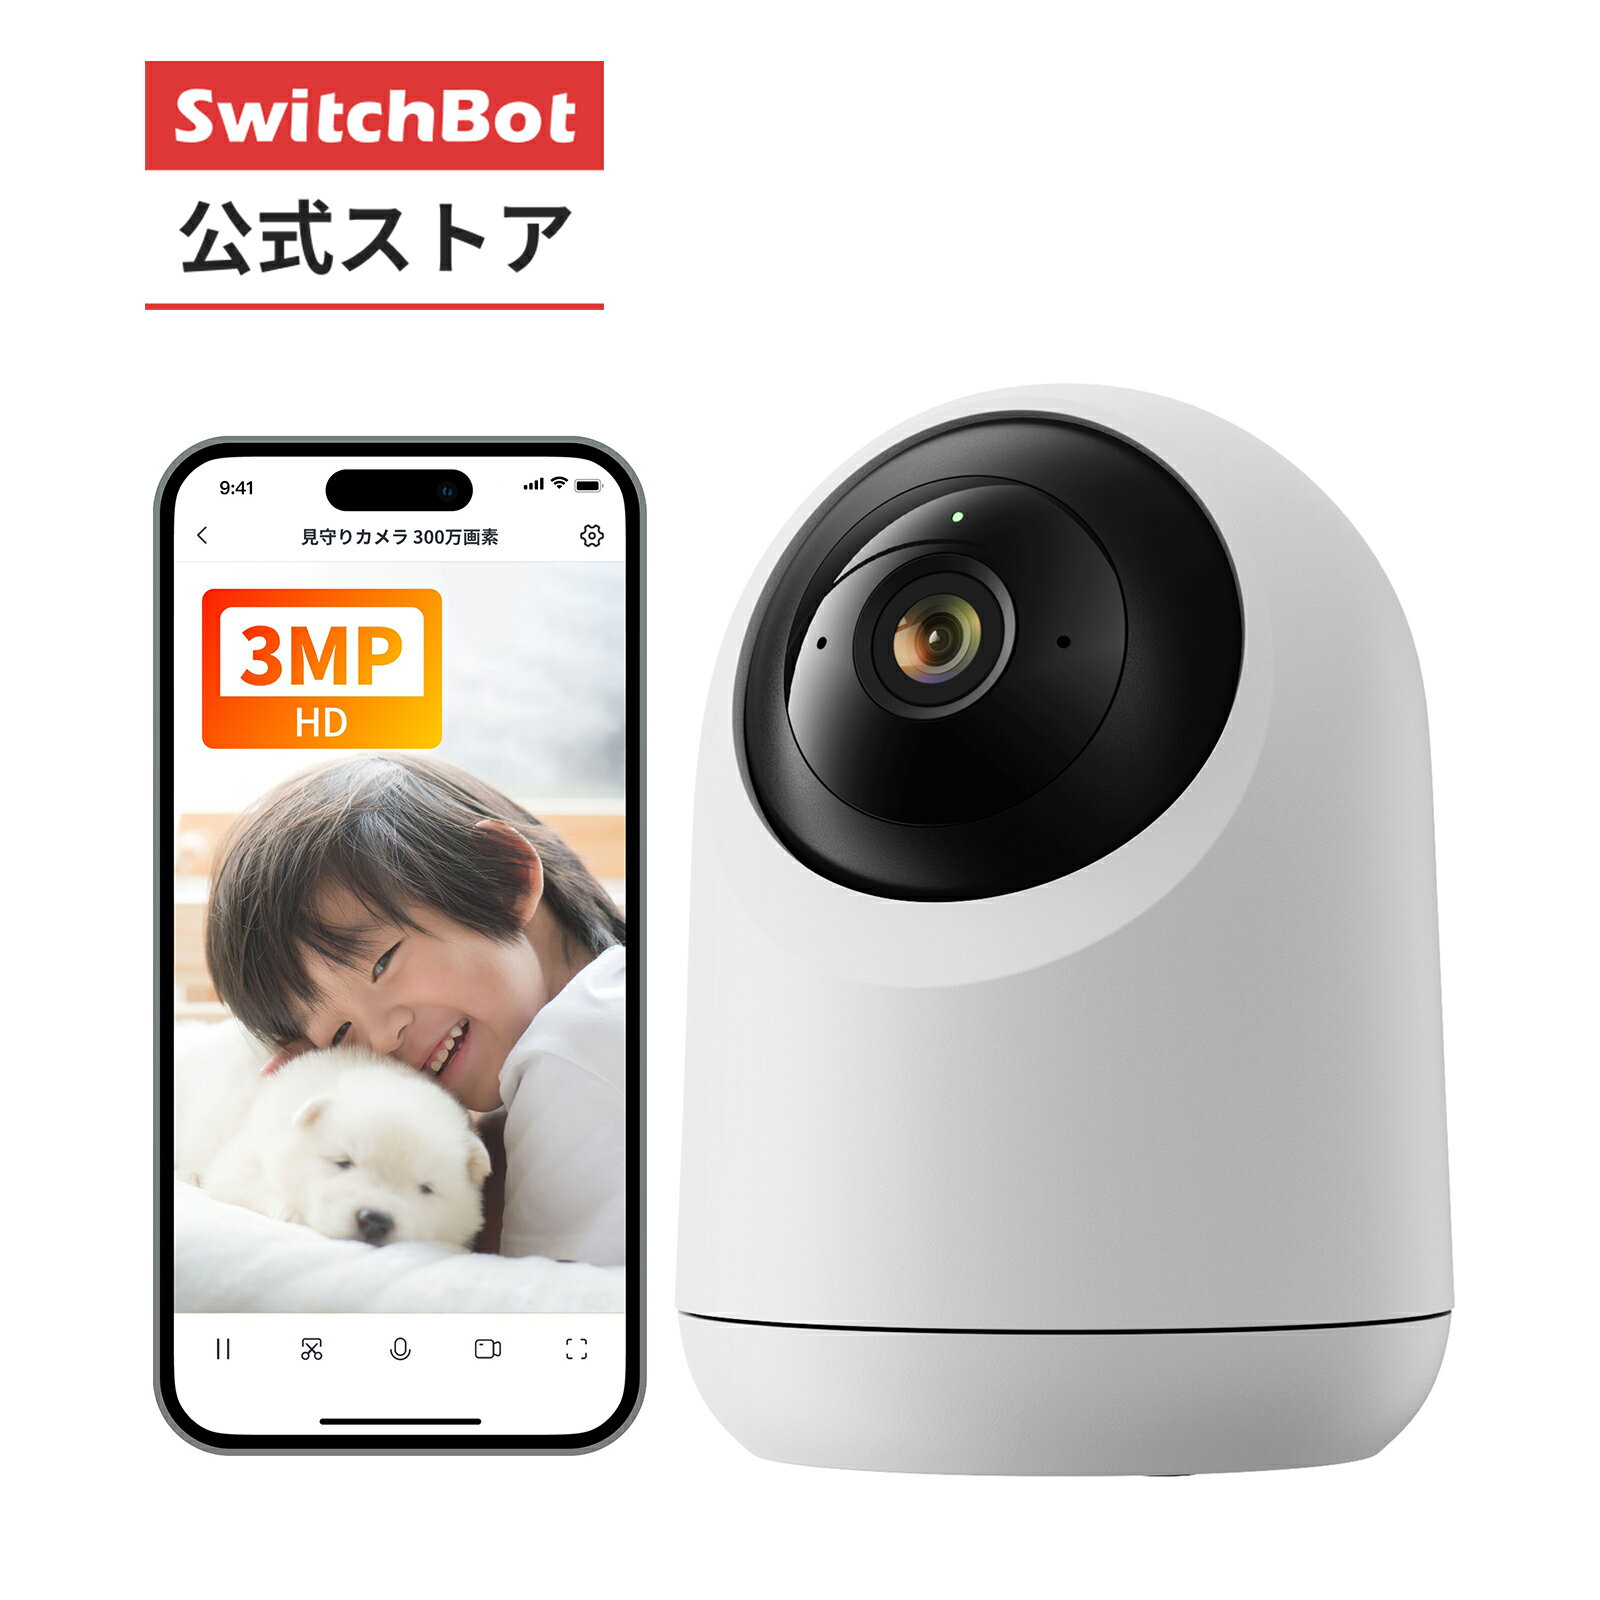 SwitchBot 見守りカメラ Plus 3MP 監視カメラ アプリ通知 遠隔確認 動体検知 自動追跡 ナイトビジョン 双方向音声通話 パン/チルト/ズーム カラーナイトビジョン 室内 スイッチボット 3年保証